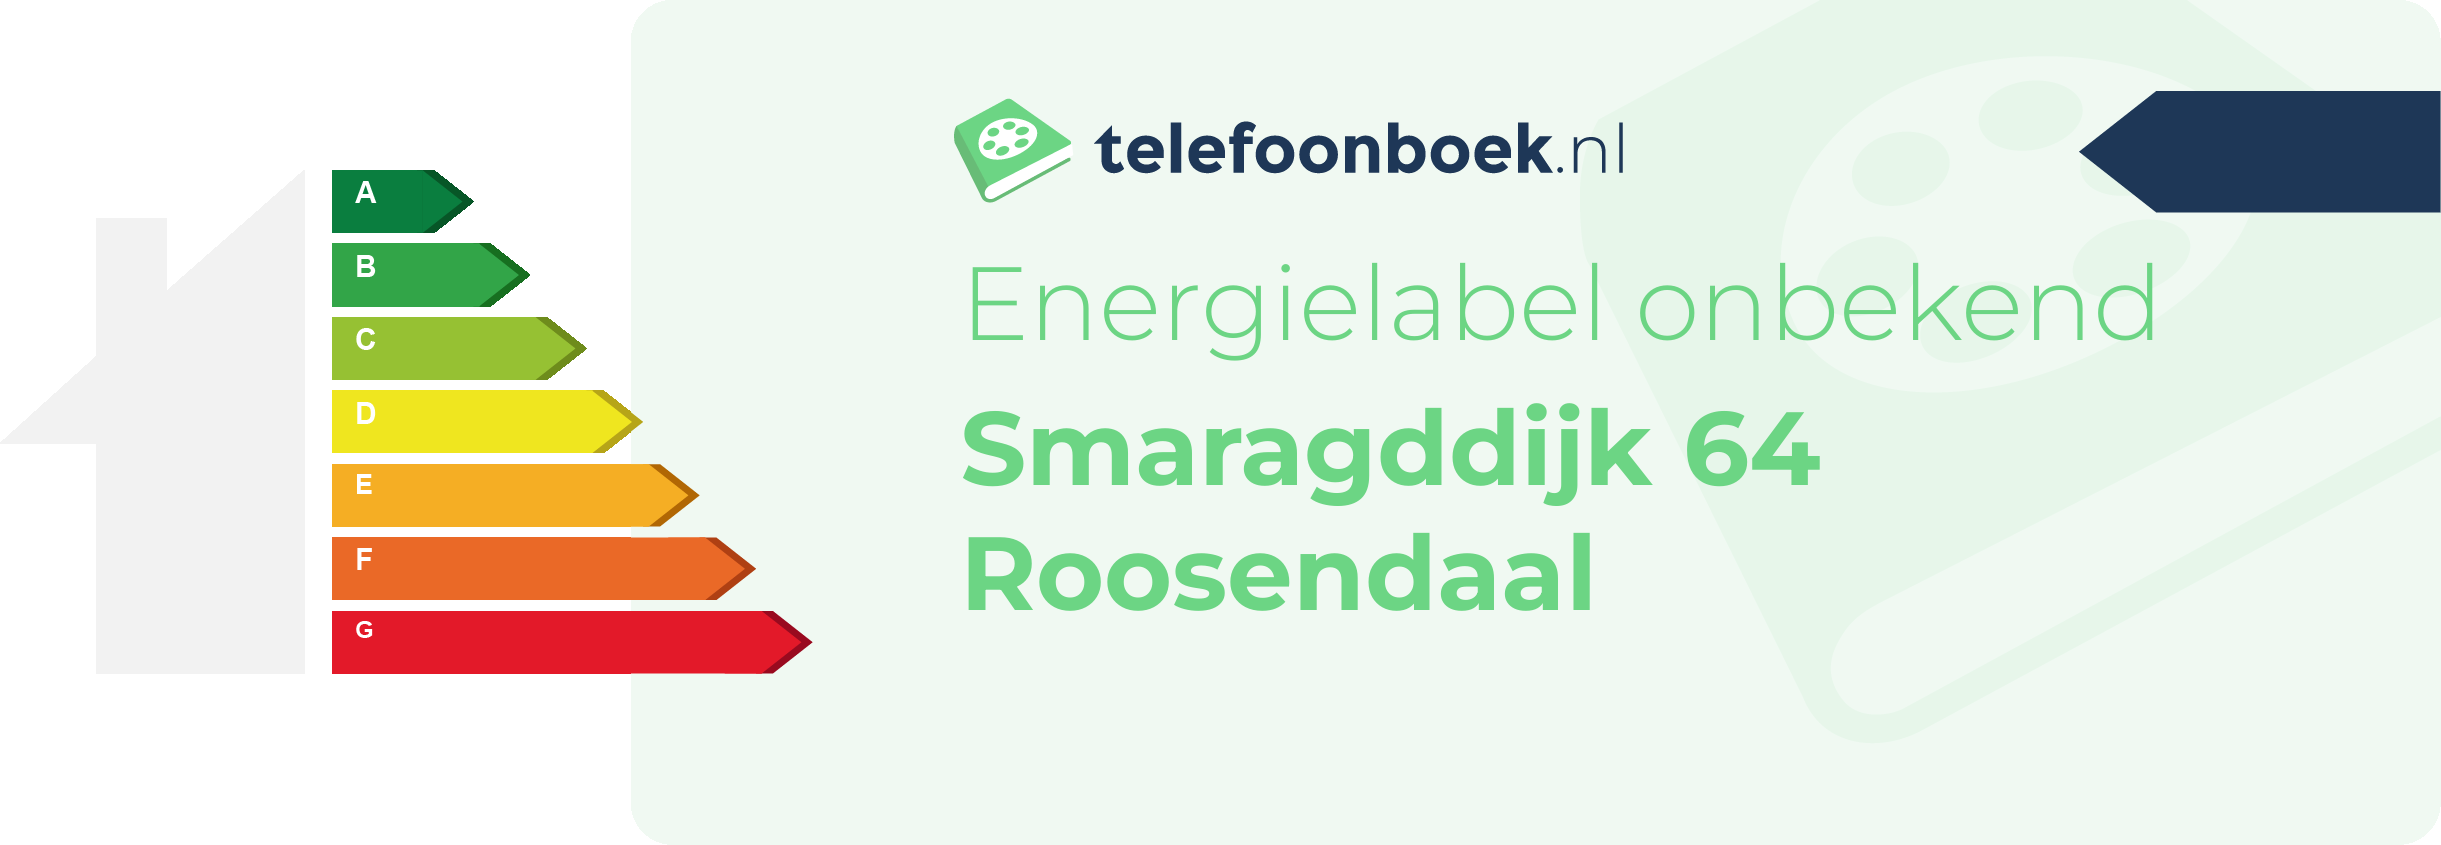 Energielabel Smaragddijk 64 Roosendaal